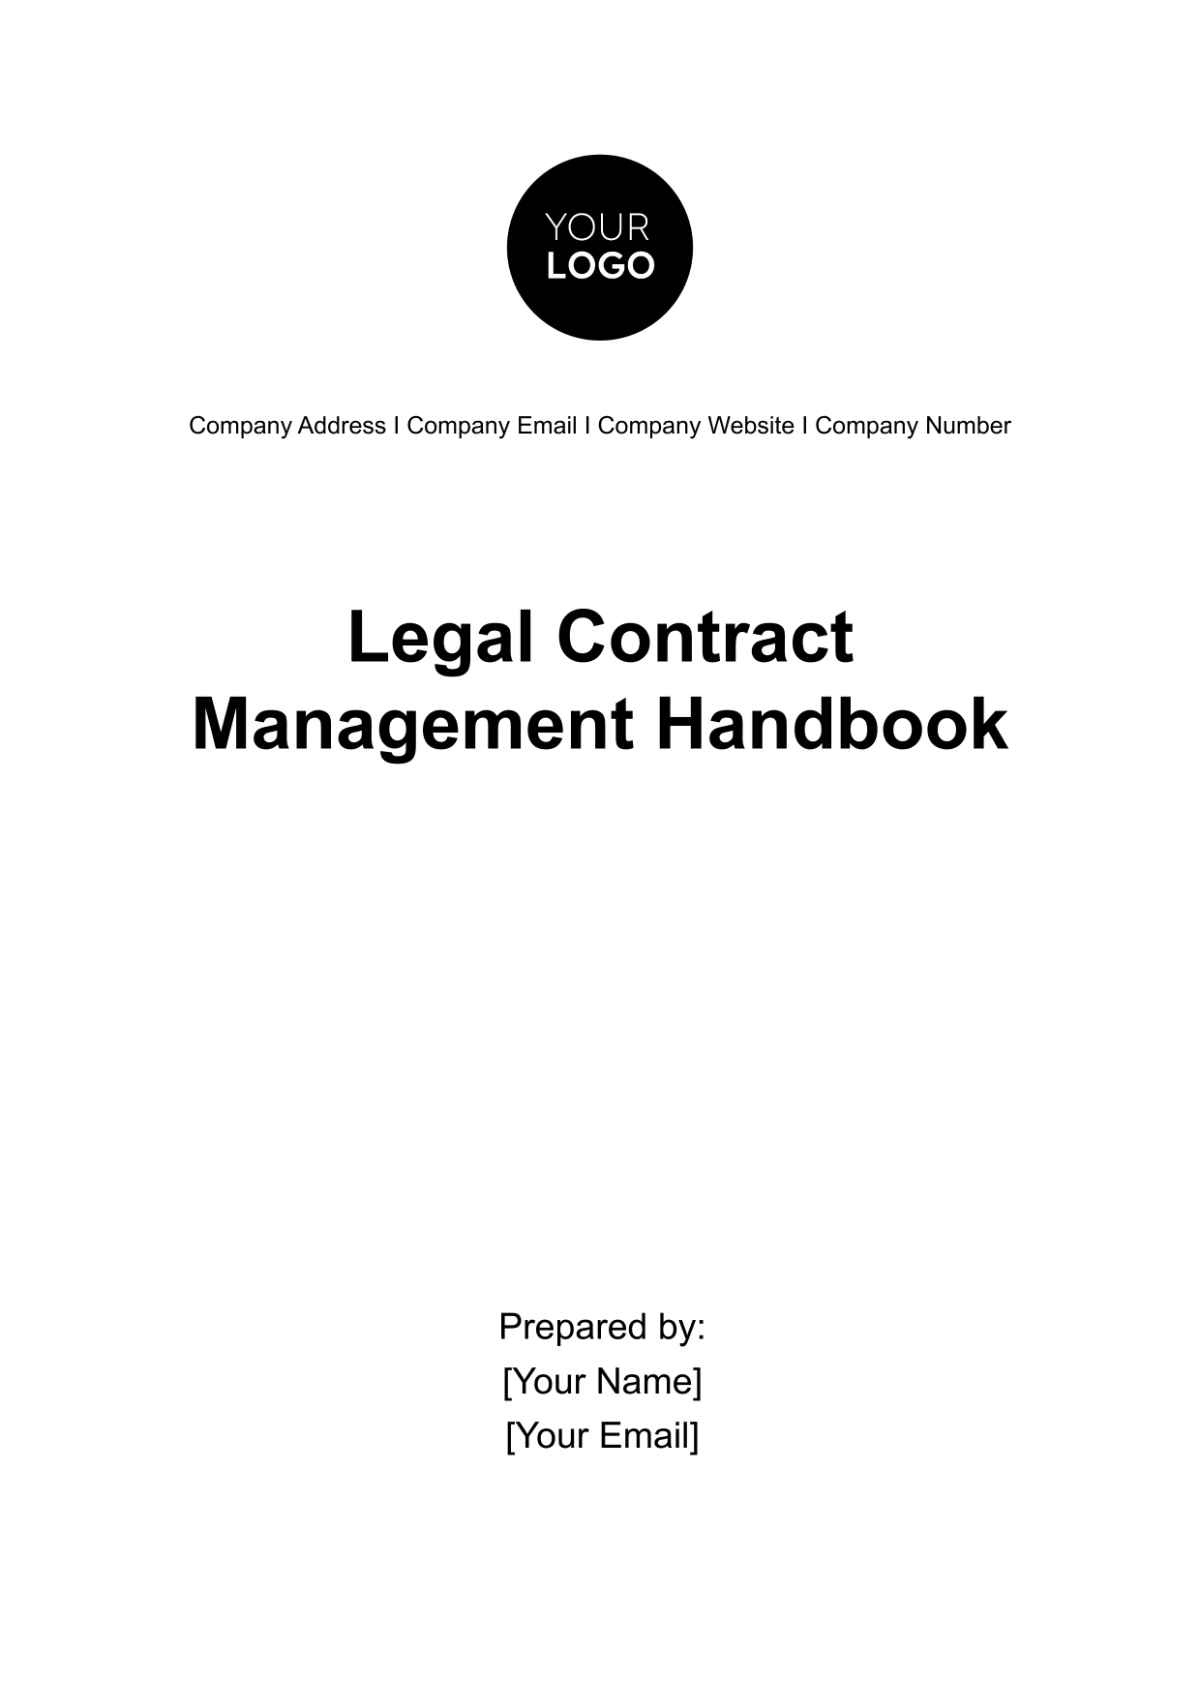 Legal Contract Management Handbook Template